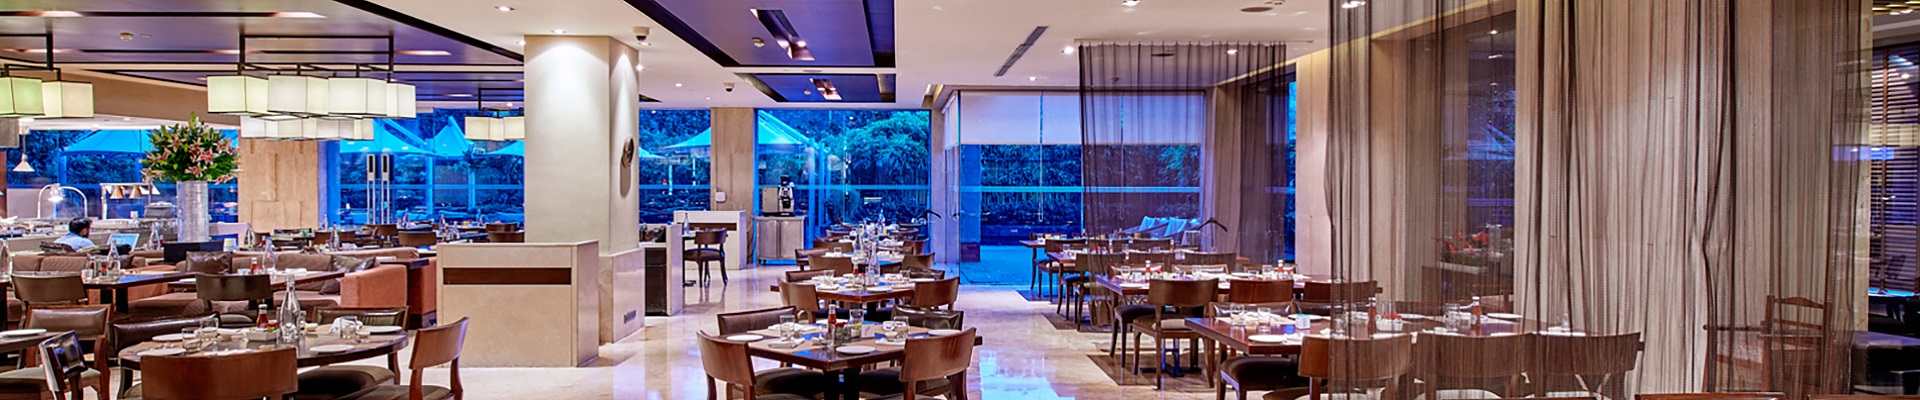 Best Restaurants in Delhi, Fine Dining Restaurants in Delhi - The LaLiT